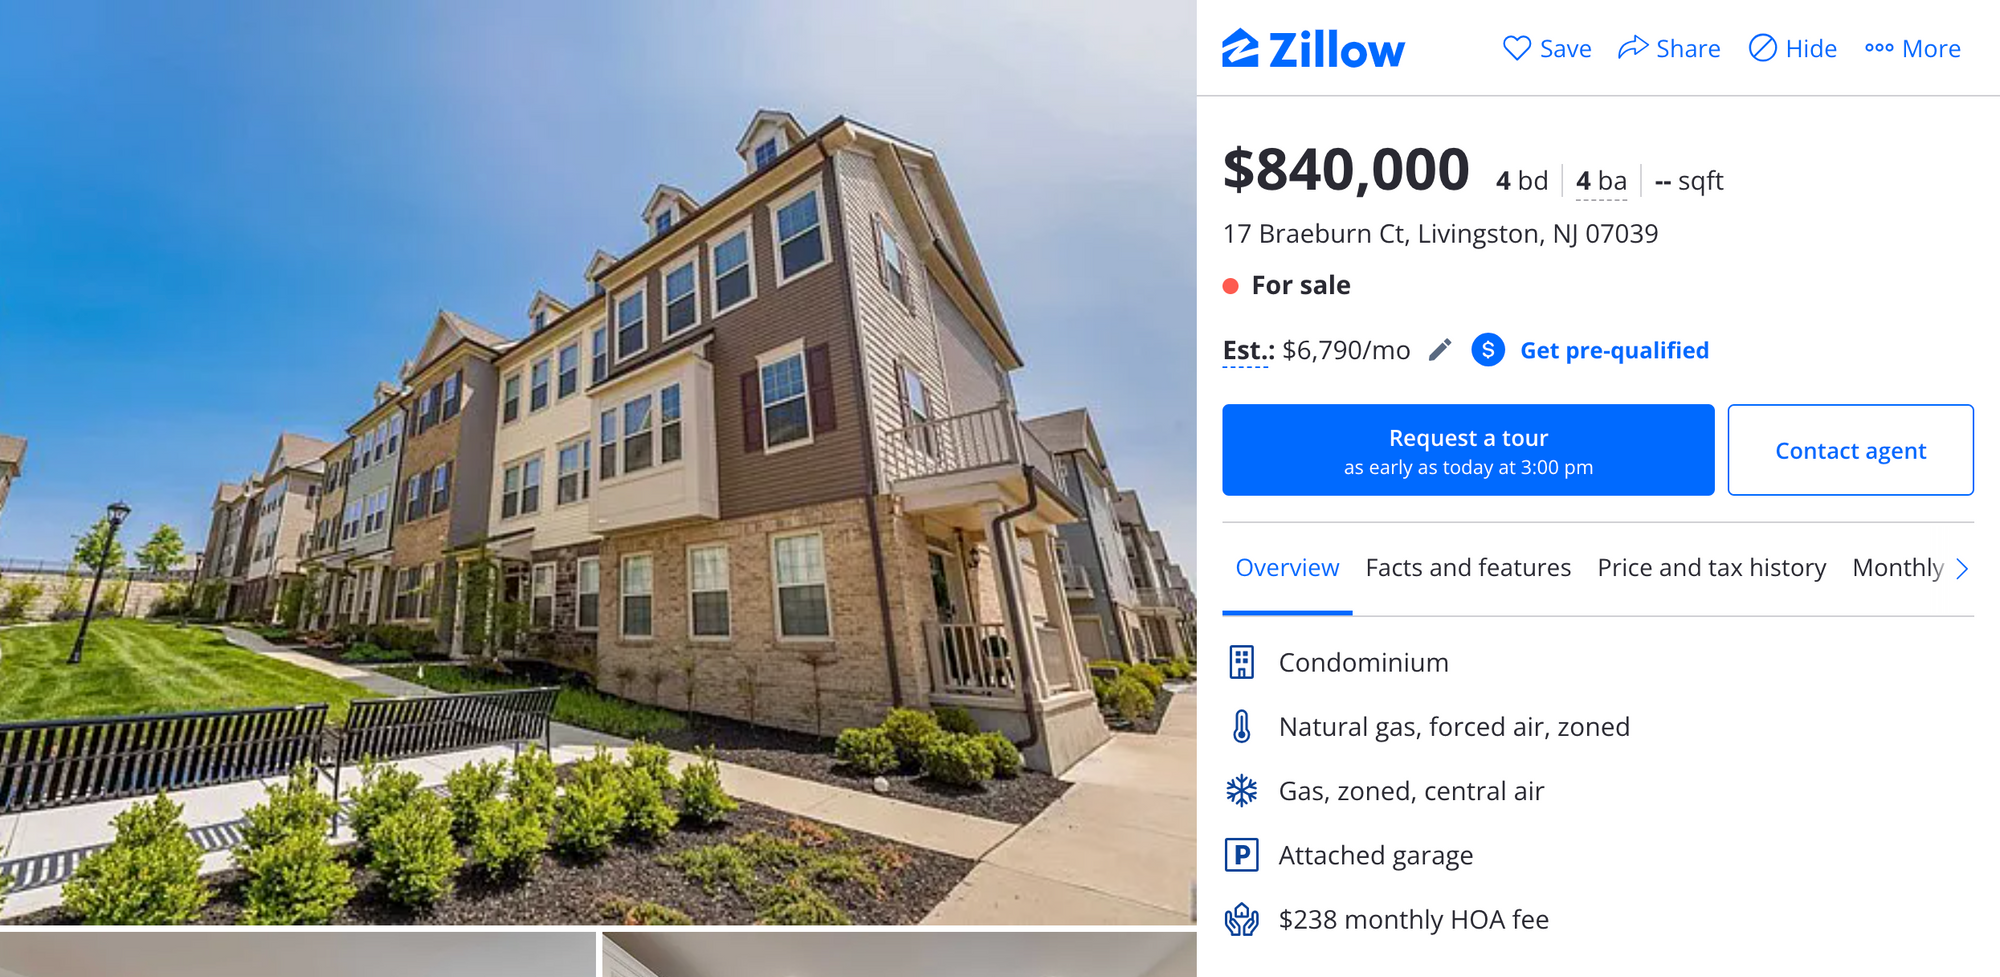 Property For Sale: $840K